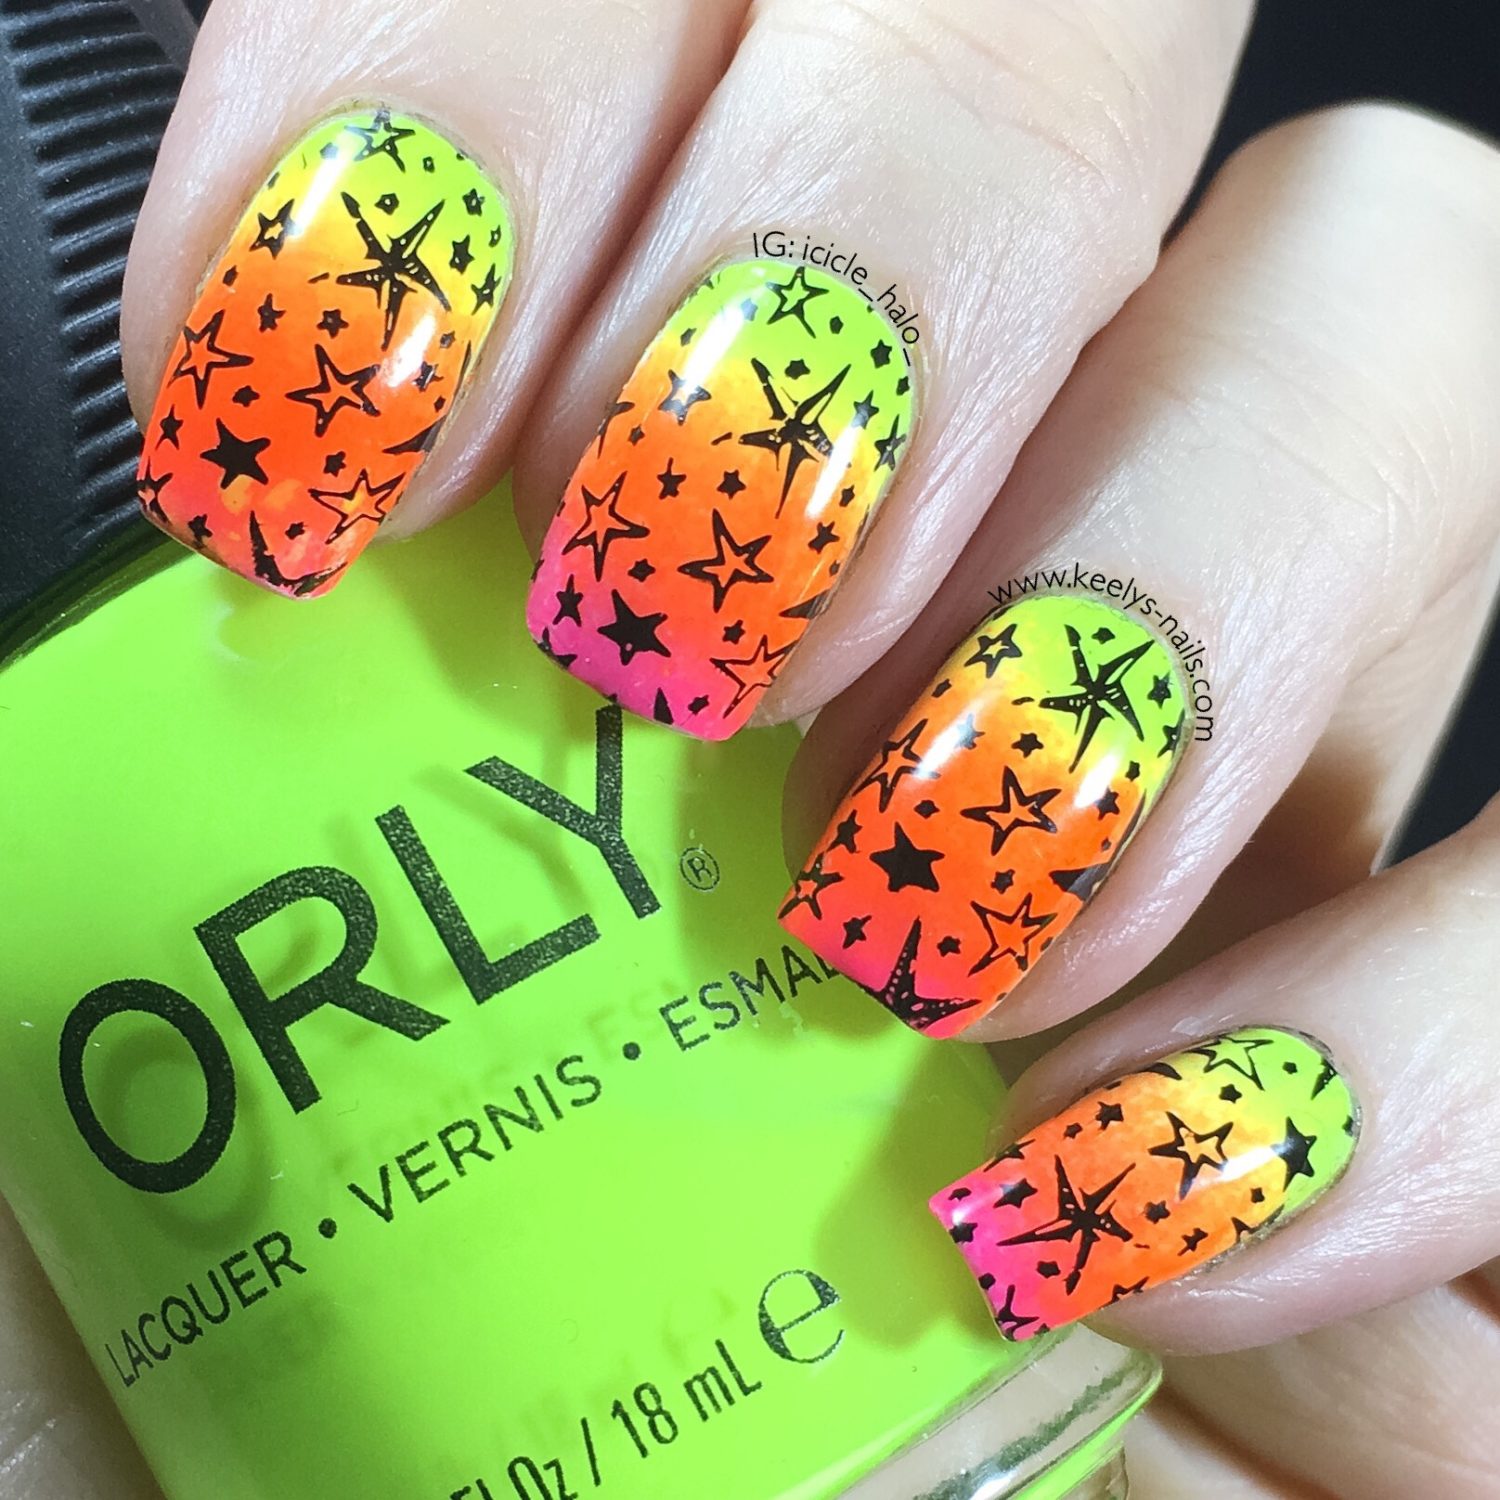 Orly Neon Gradient left hand